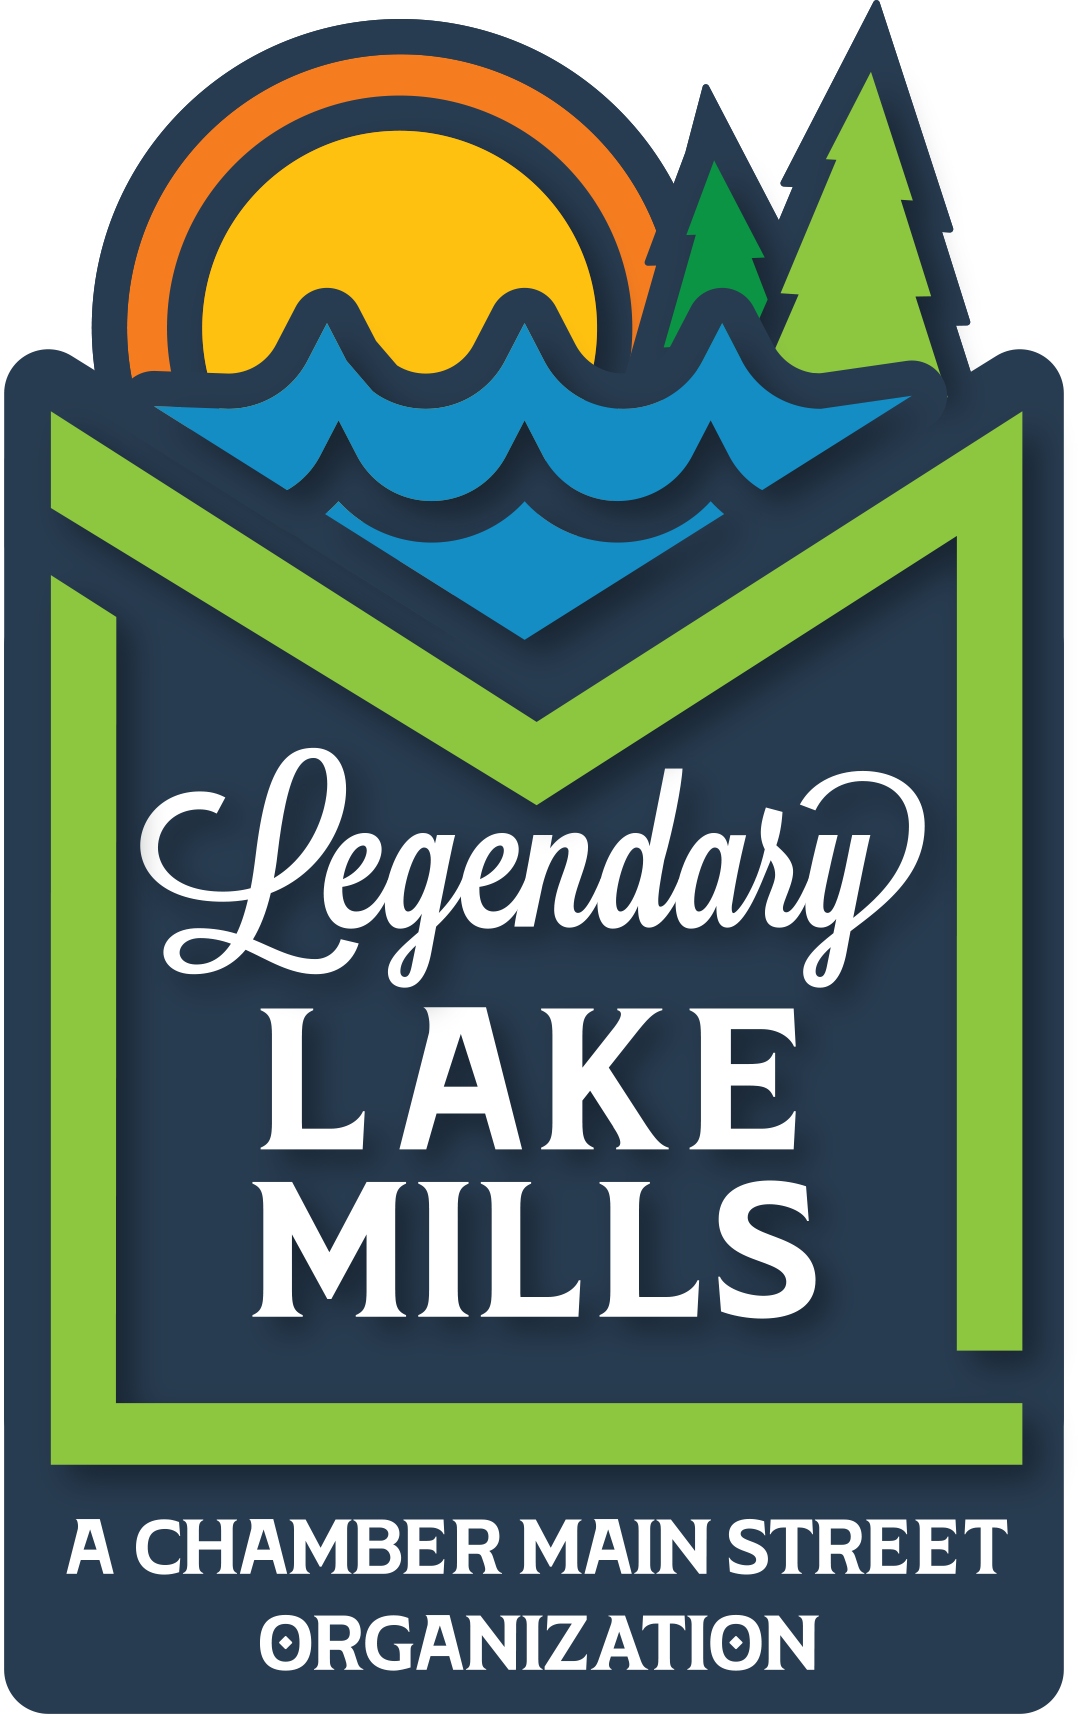 Legendary Lake Mills